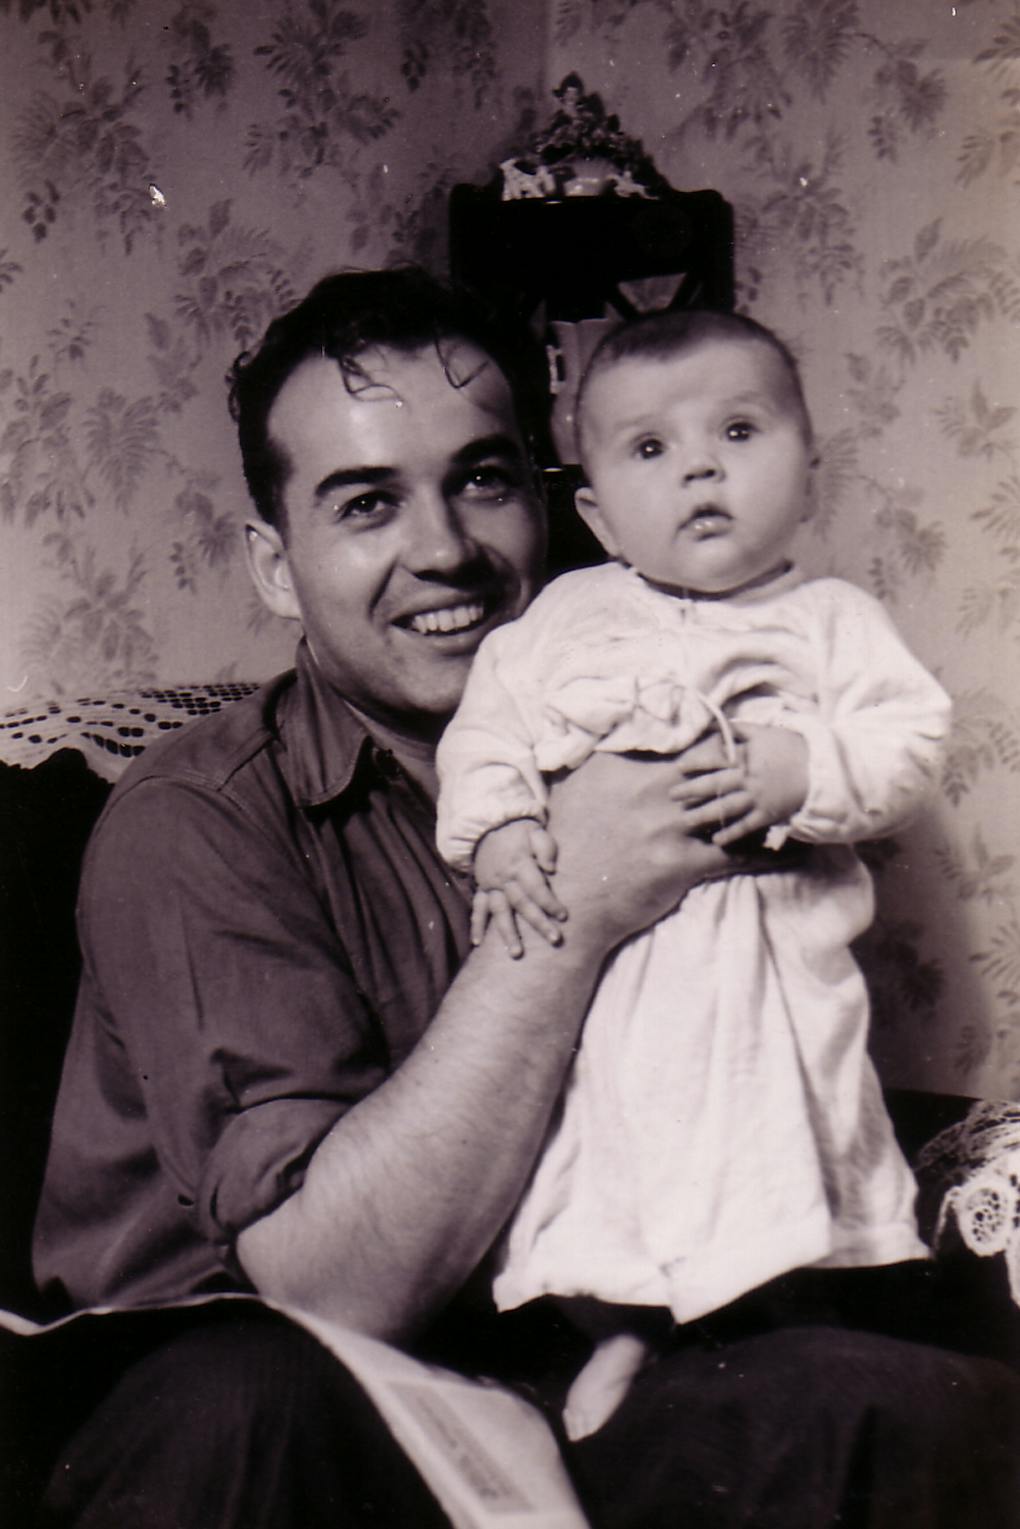 Stanley holding his young daughter Rachel